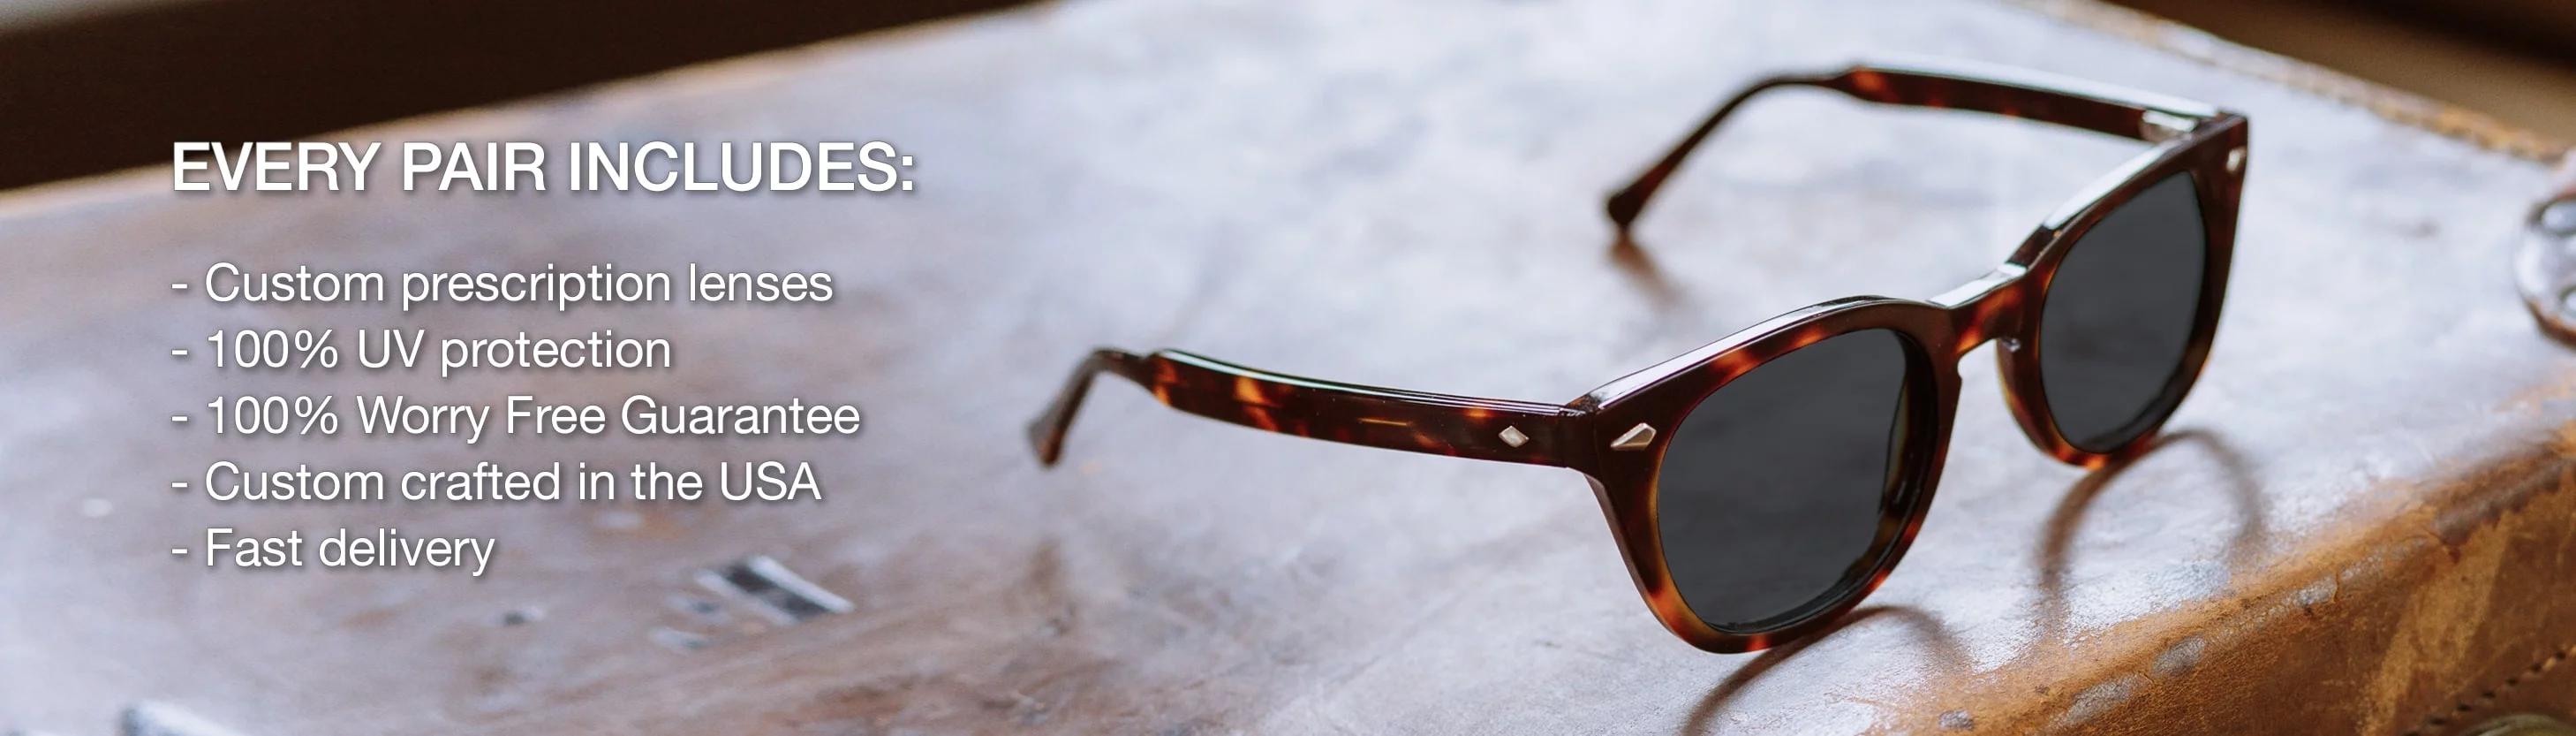 Prescription Sunglasses | Buy Sunglasses Online with Your Rx